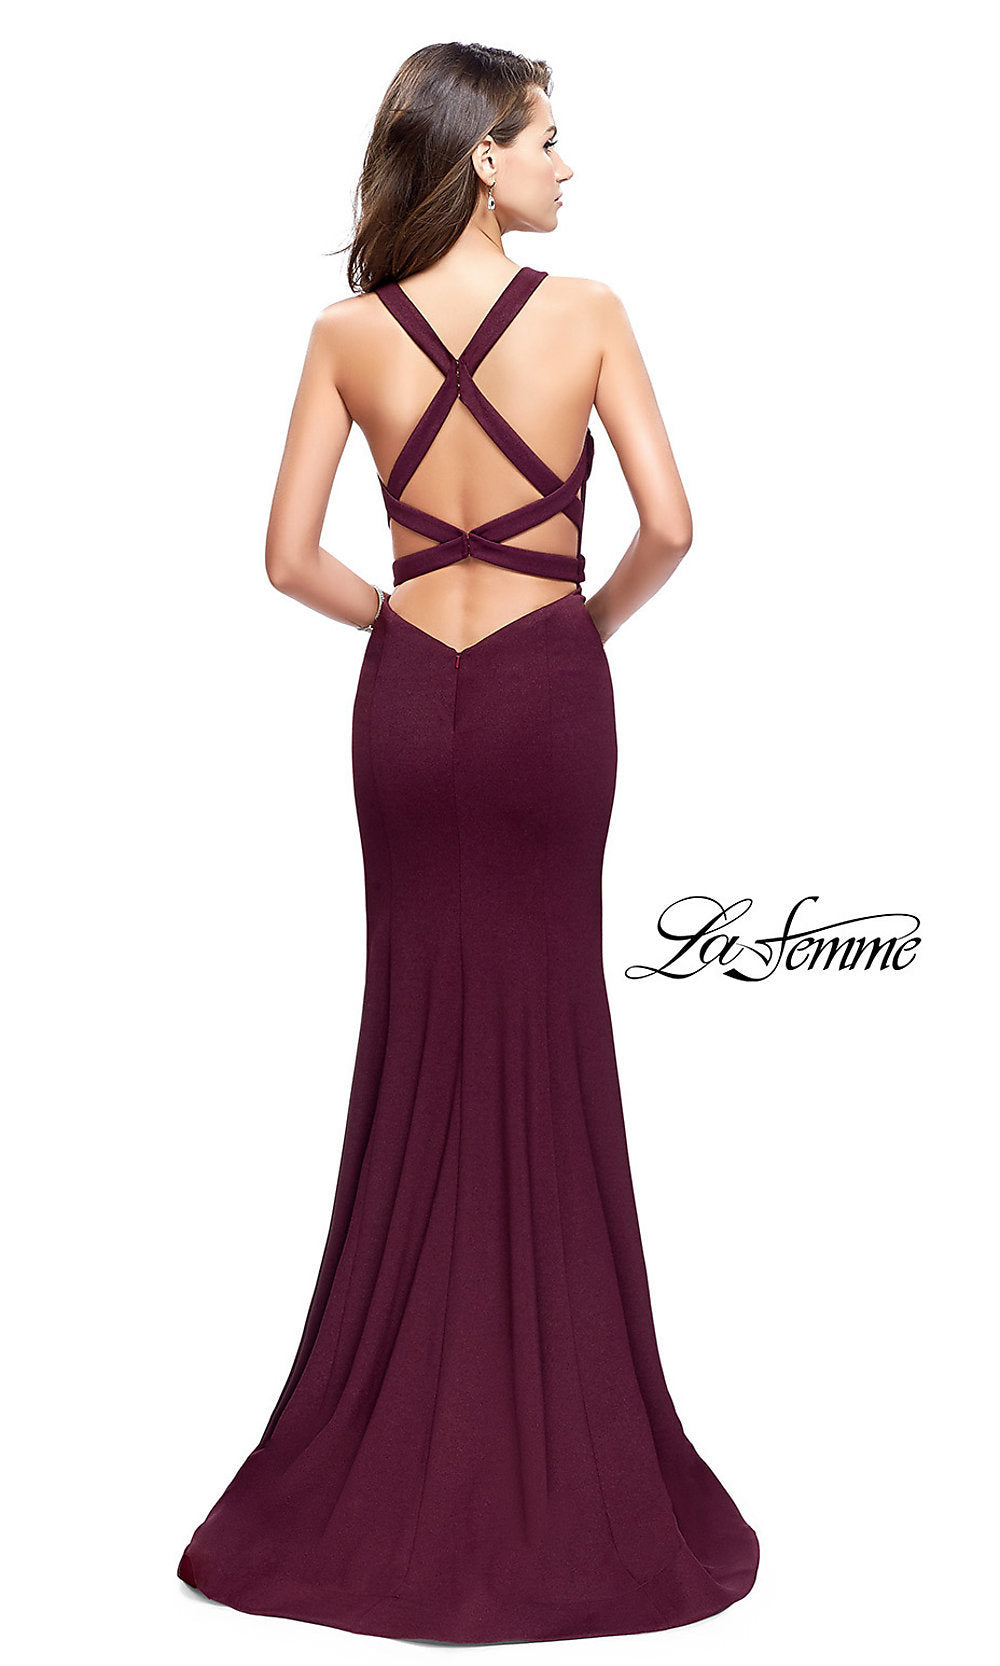 La Femme Strappy-Back Long Burgundy Red Prom Dress